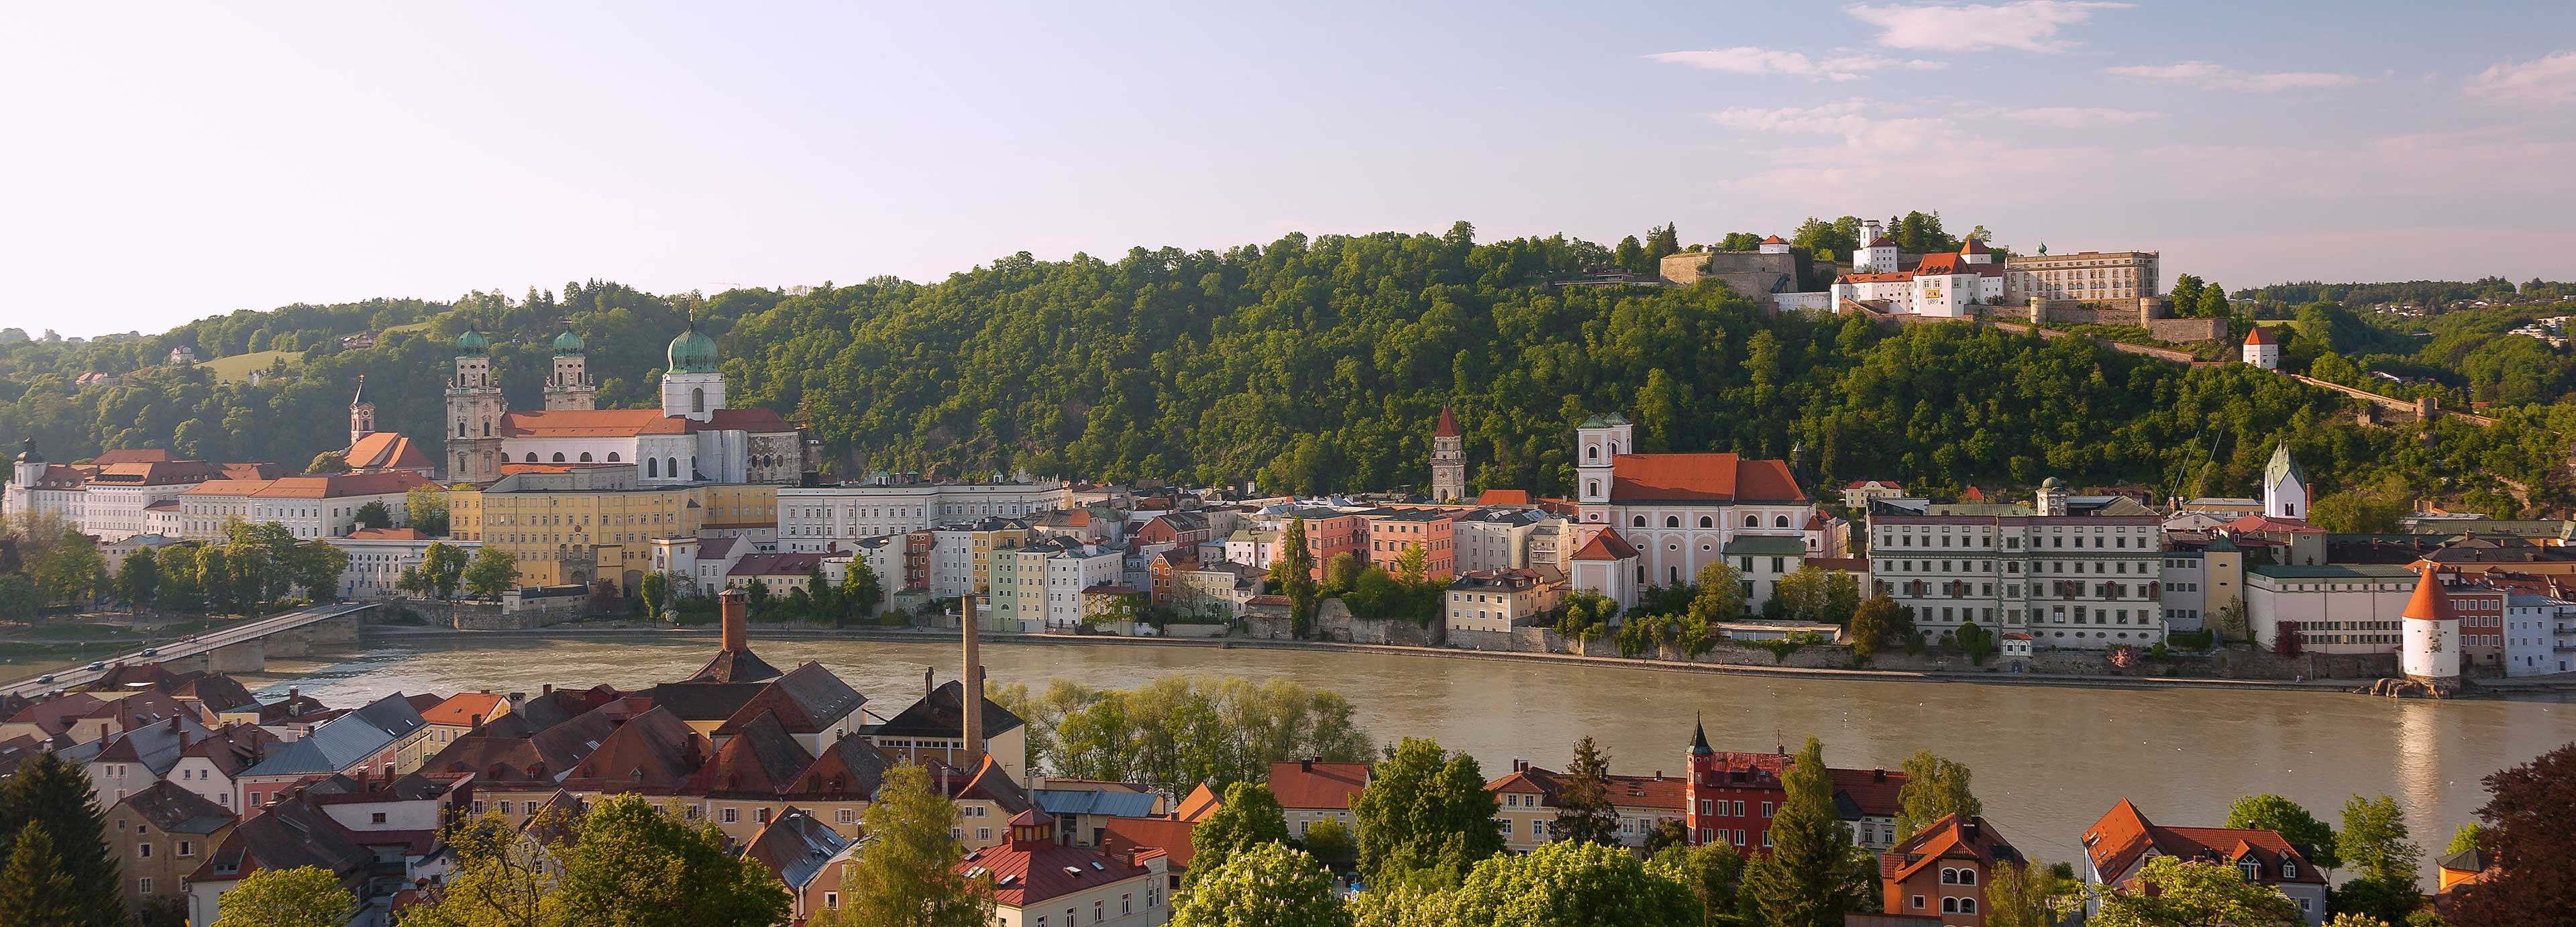 Handwerk Passau
 Sightsleeping Stadt Passau kulturelle Höhepunkte